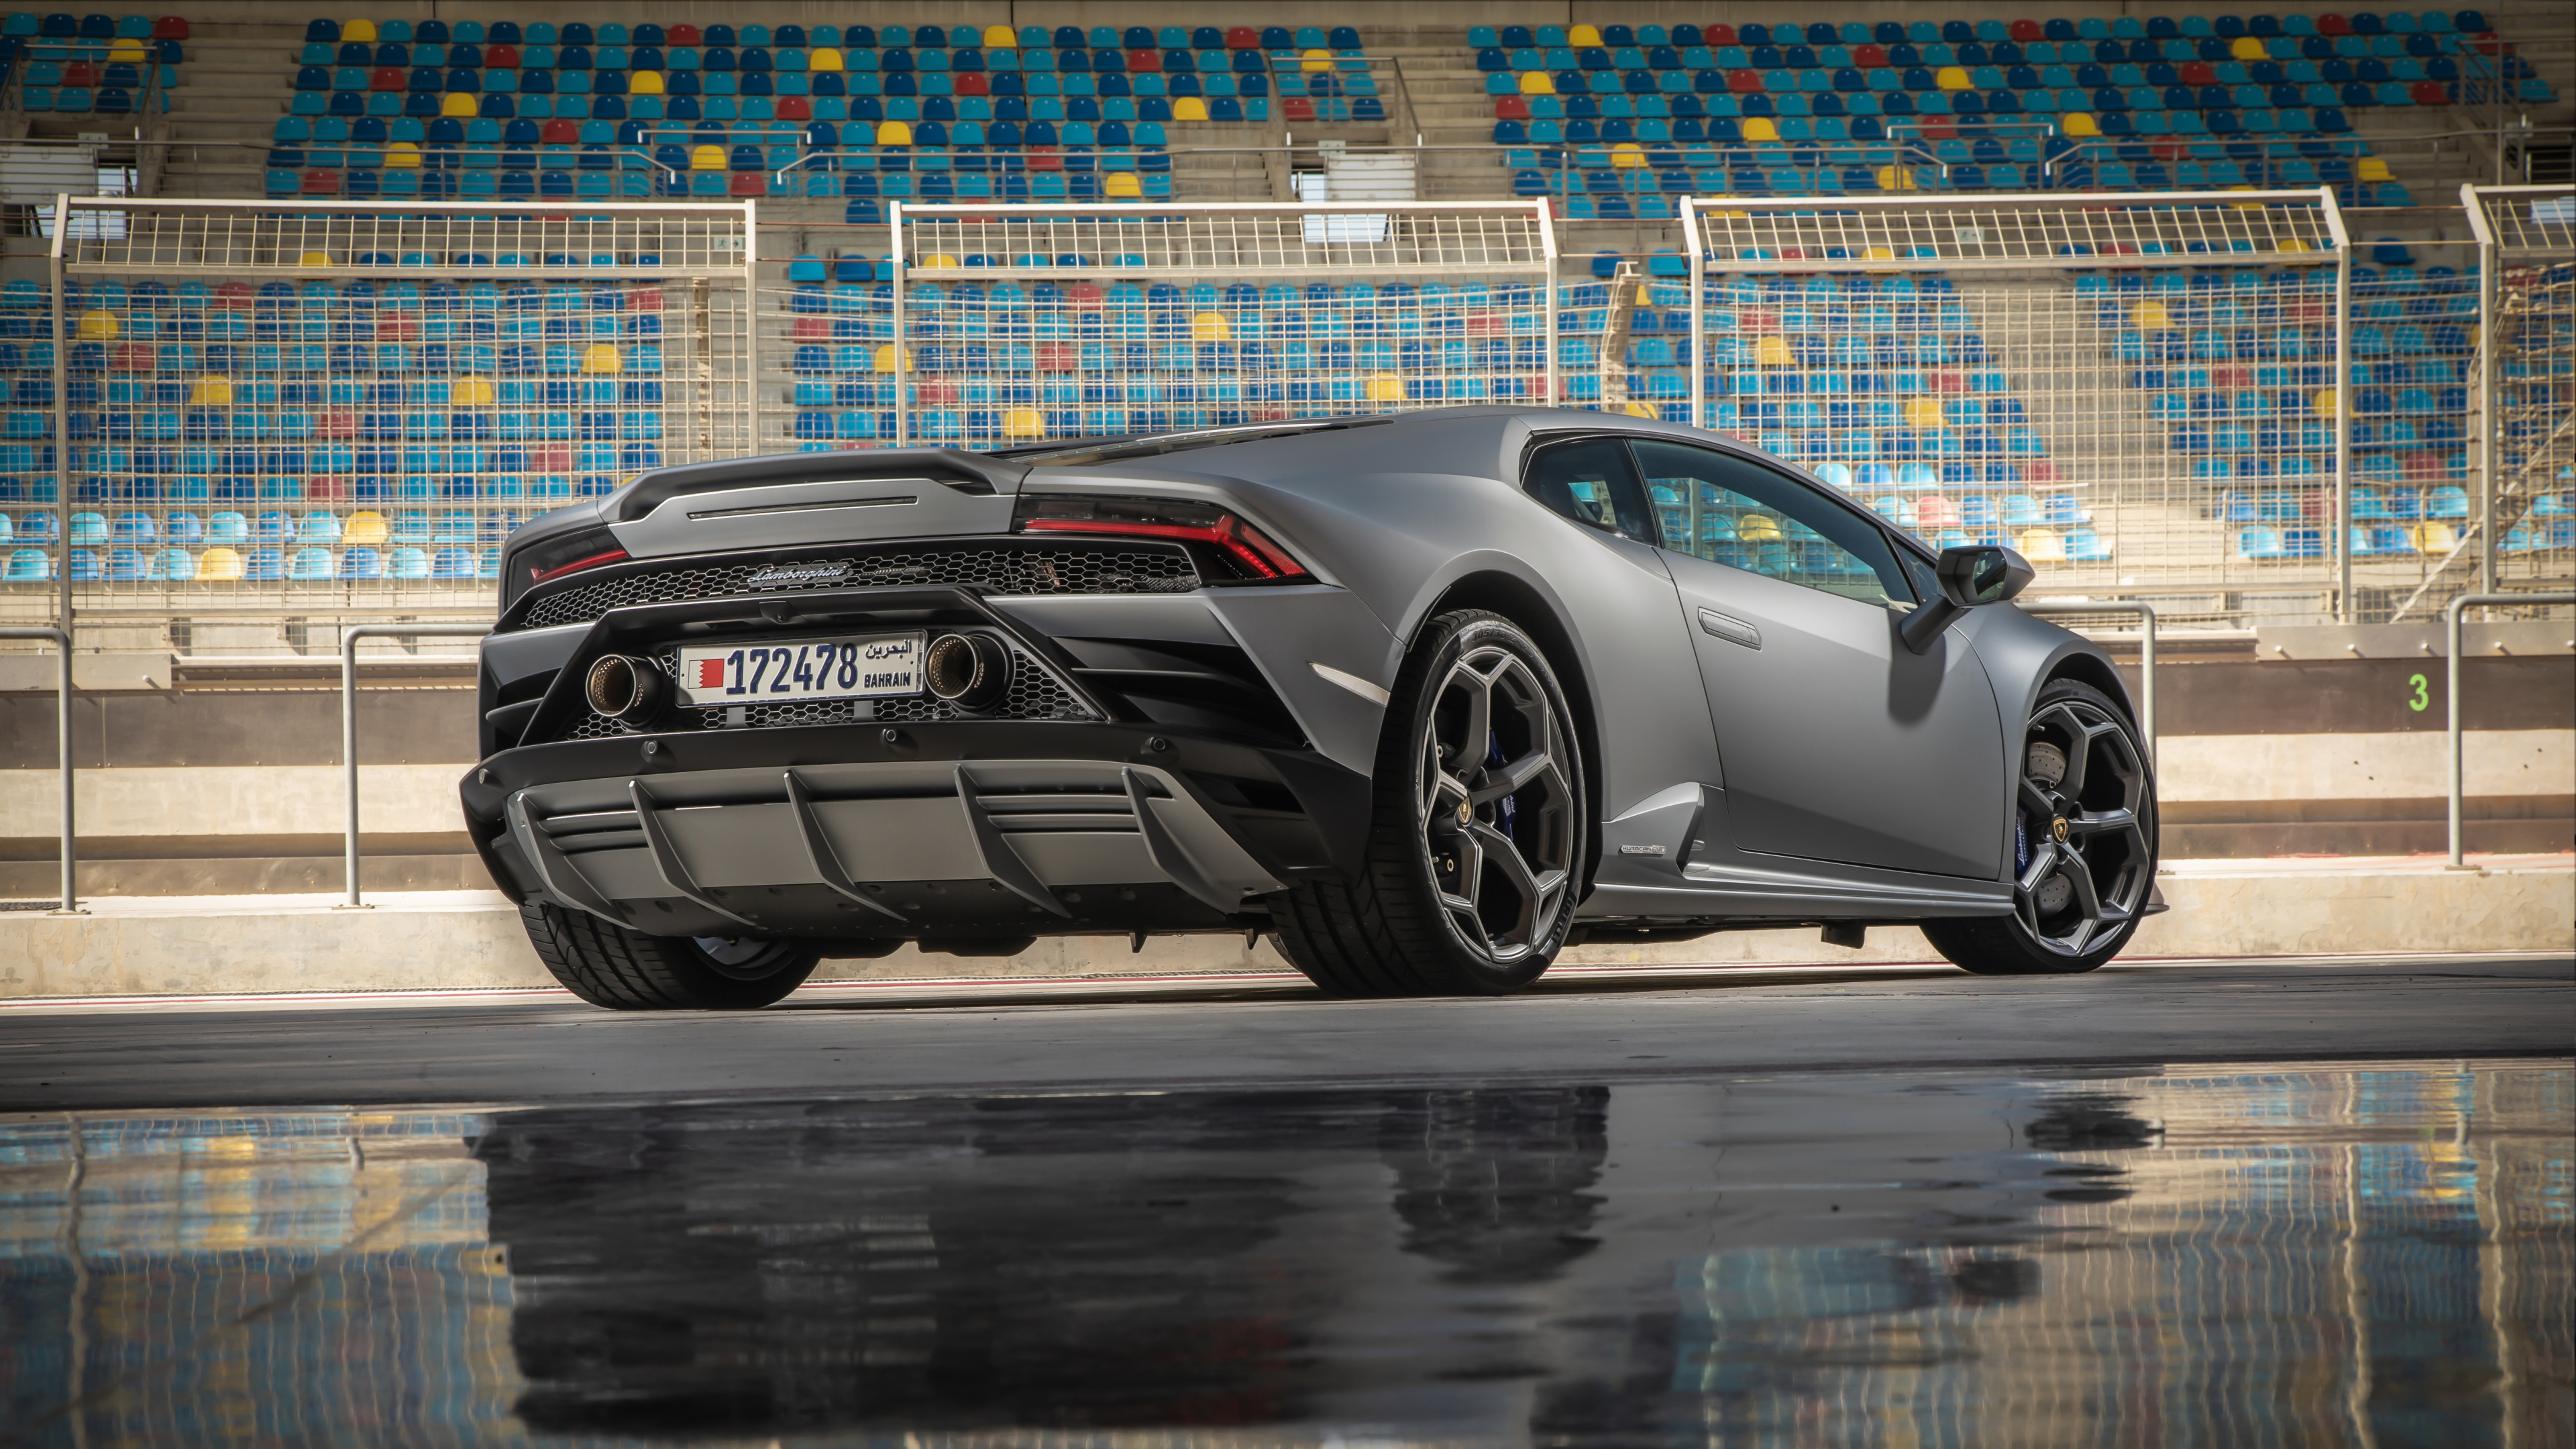 Lamborghini 4K Ultra HD Wallpapers, HD Lamborghini 3840x2160 Backgrounds,  Free Images Download